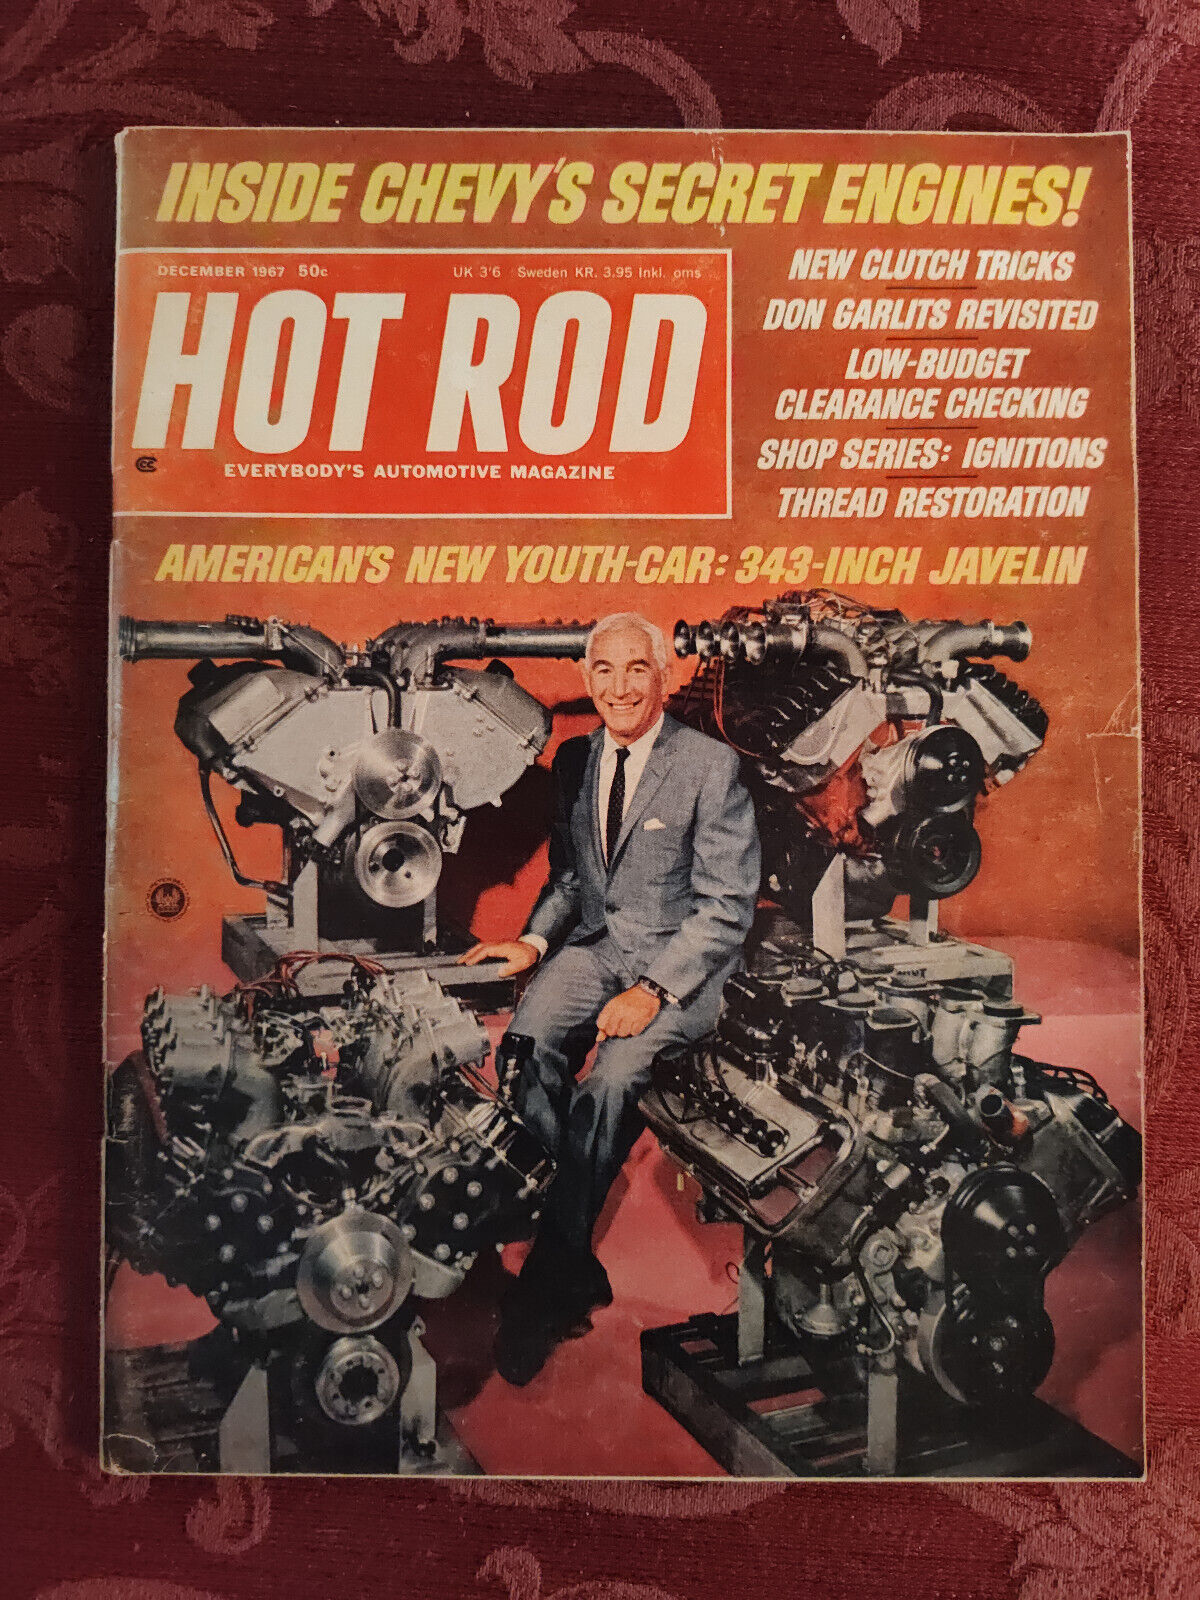 Rare HOT ROD Magazine December 1967 343 Inch Javelin Chevy Secret Engine